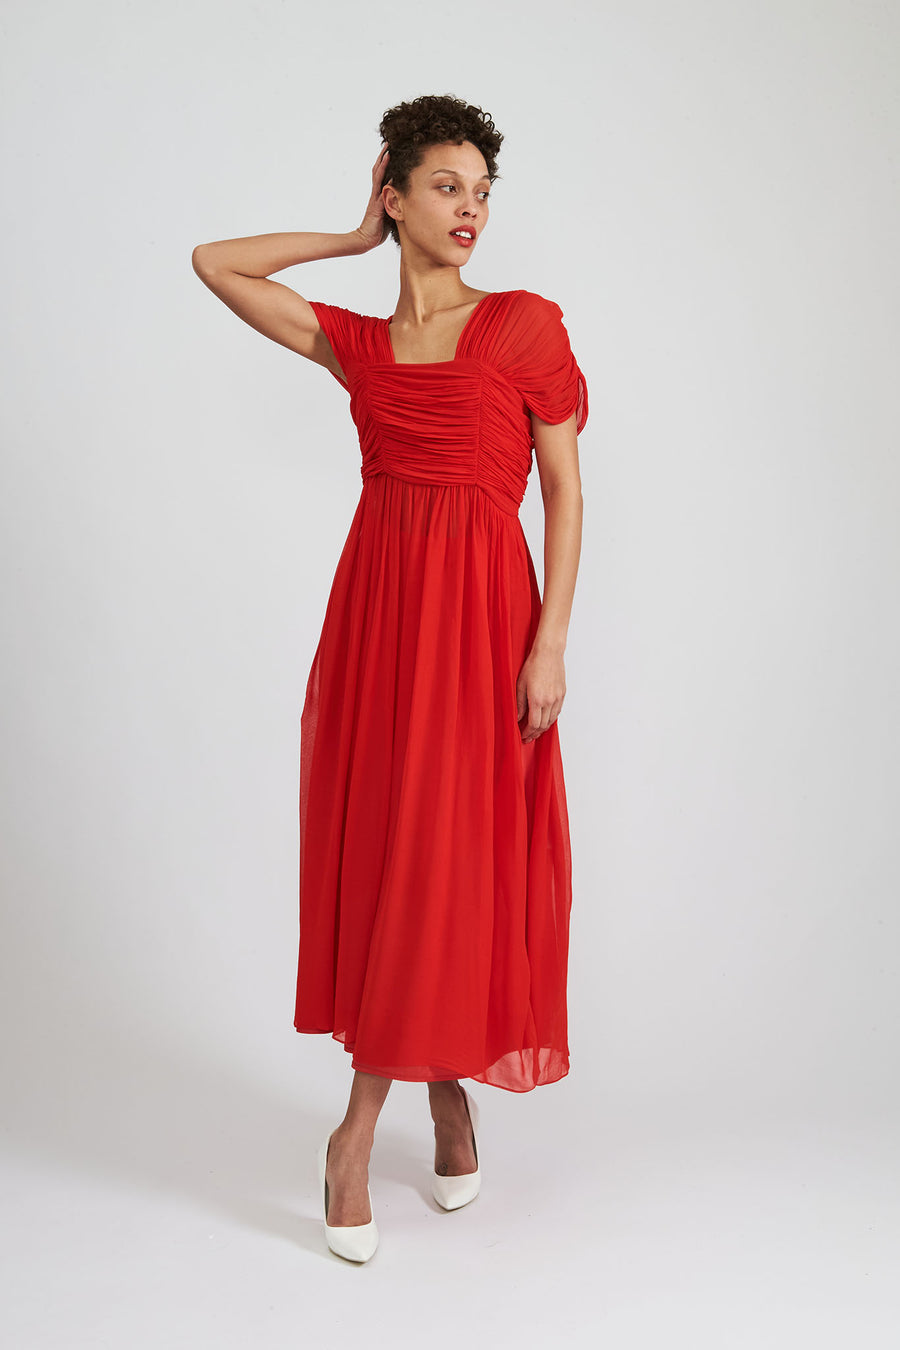 BATSHEVA - Phillipa Dress in Red Chiffon